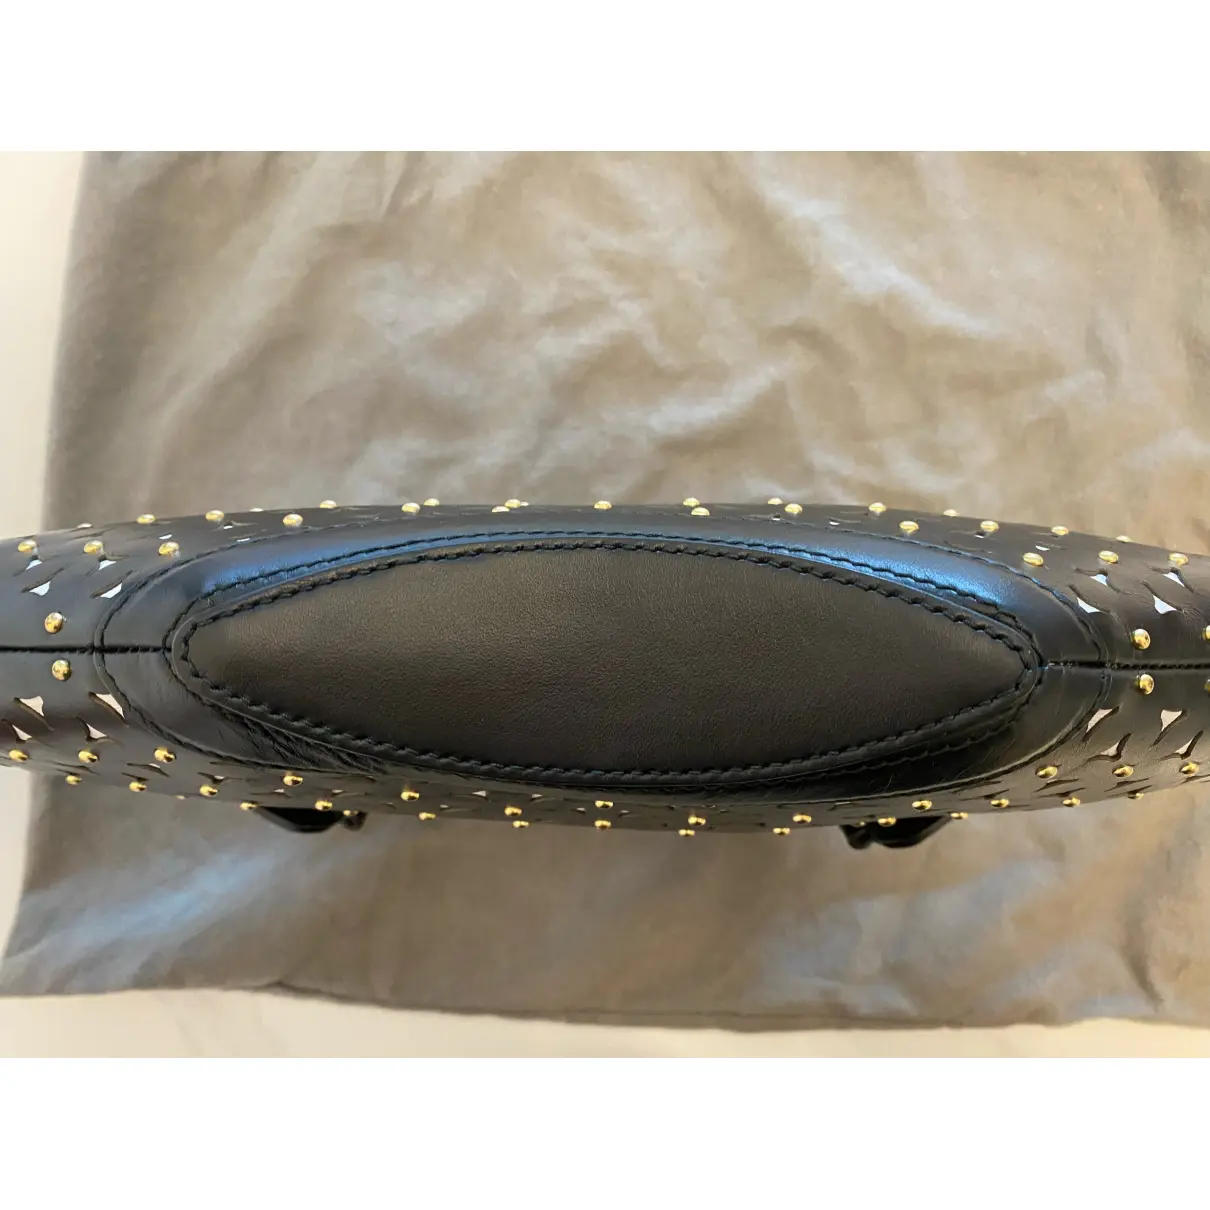 Manta leather clutch bag Alexander McQueen